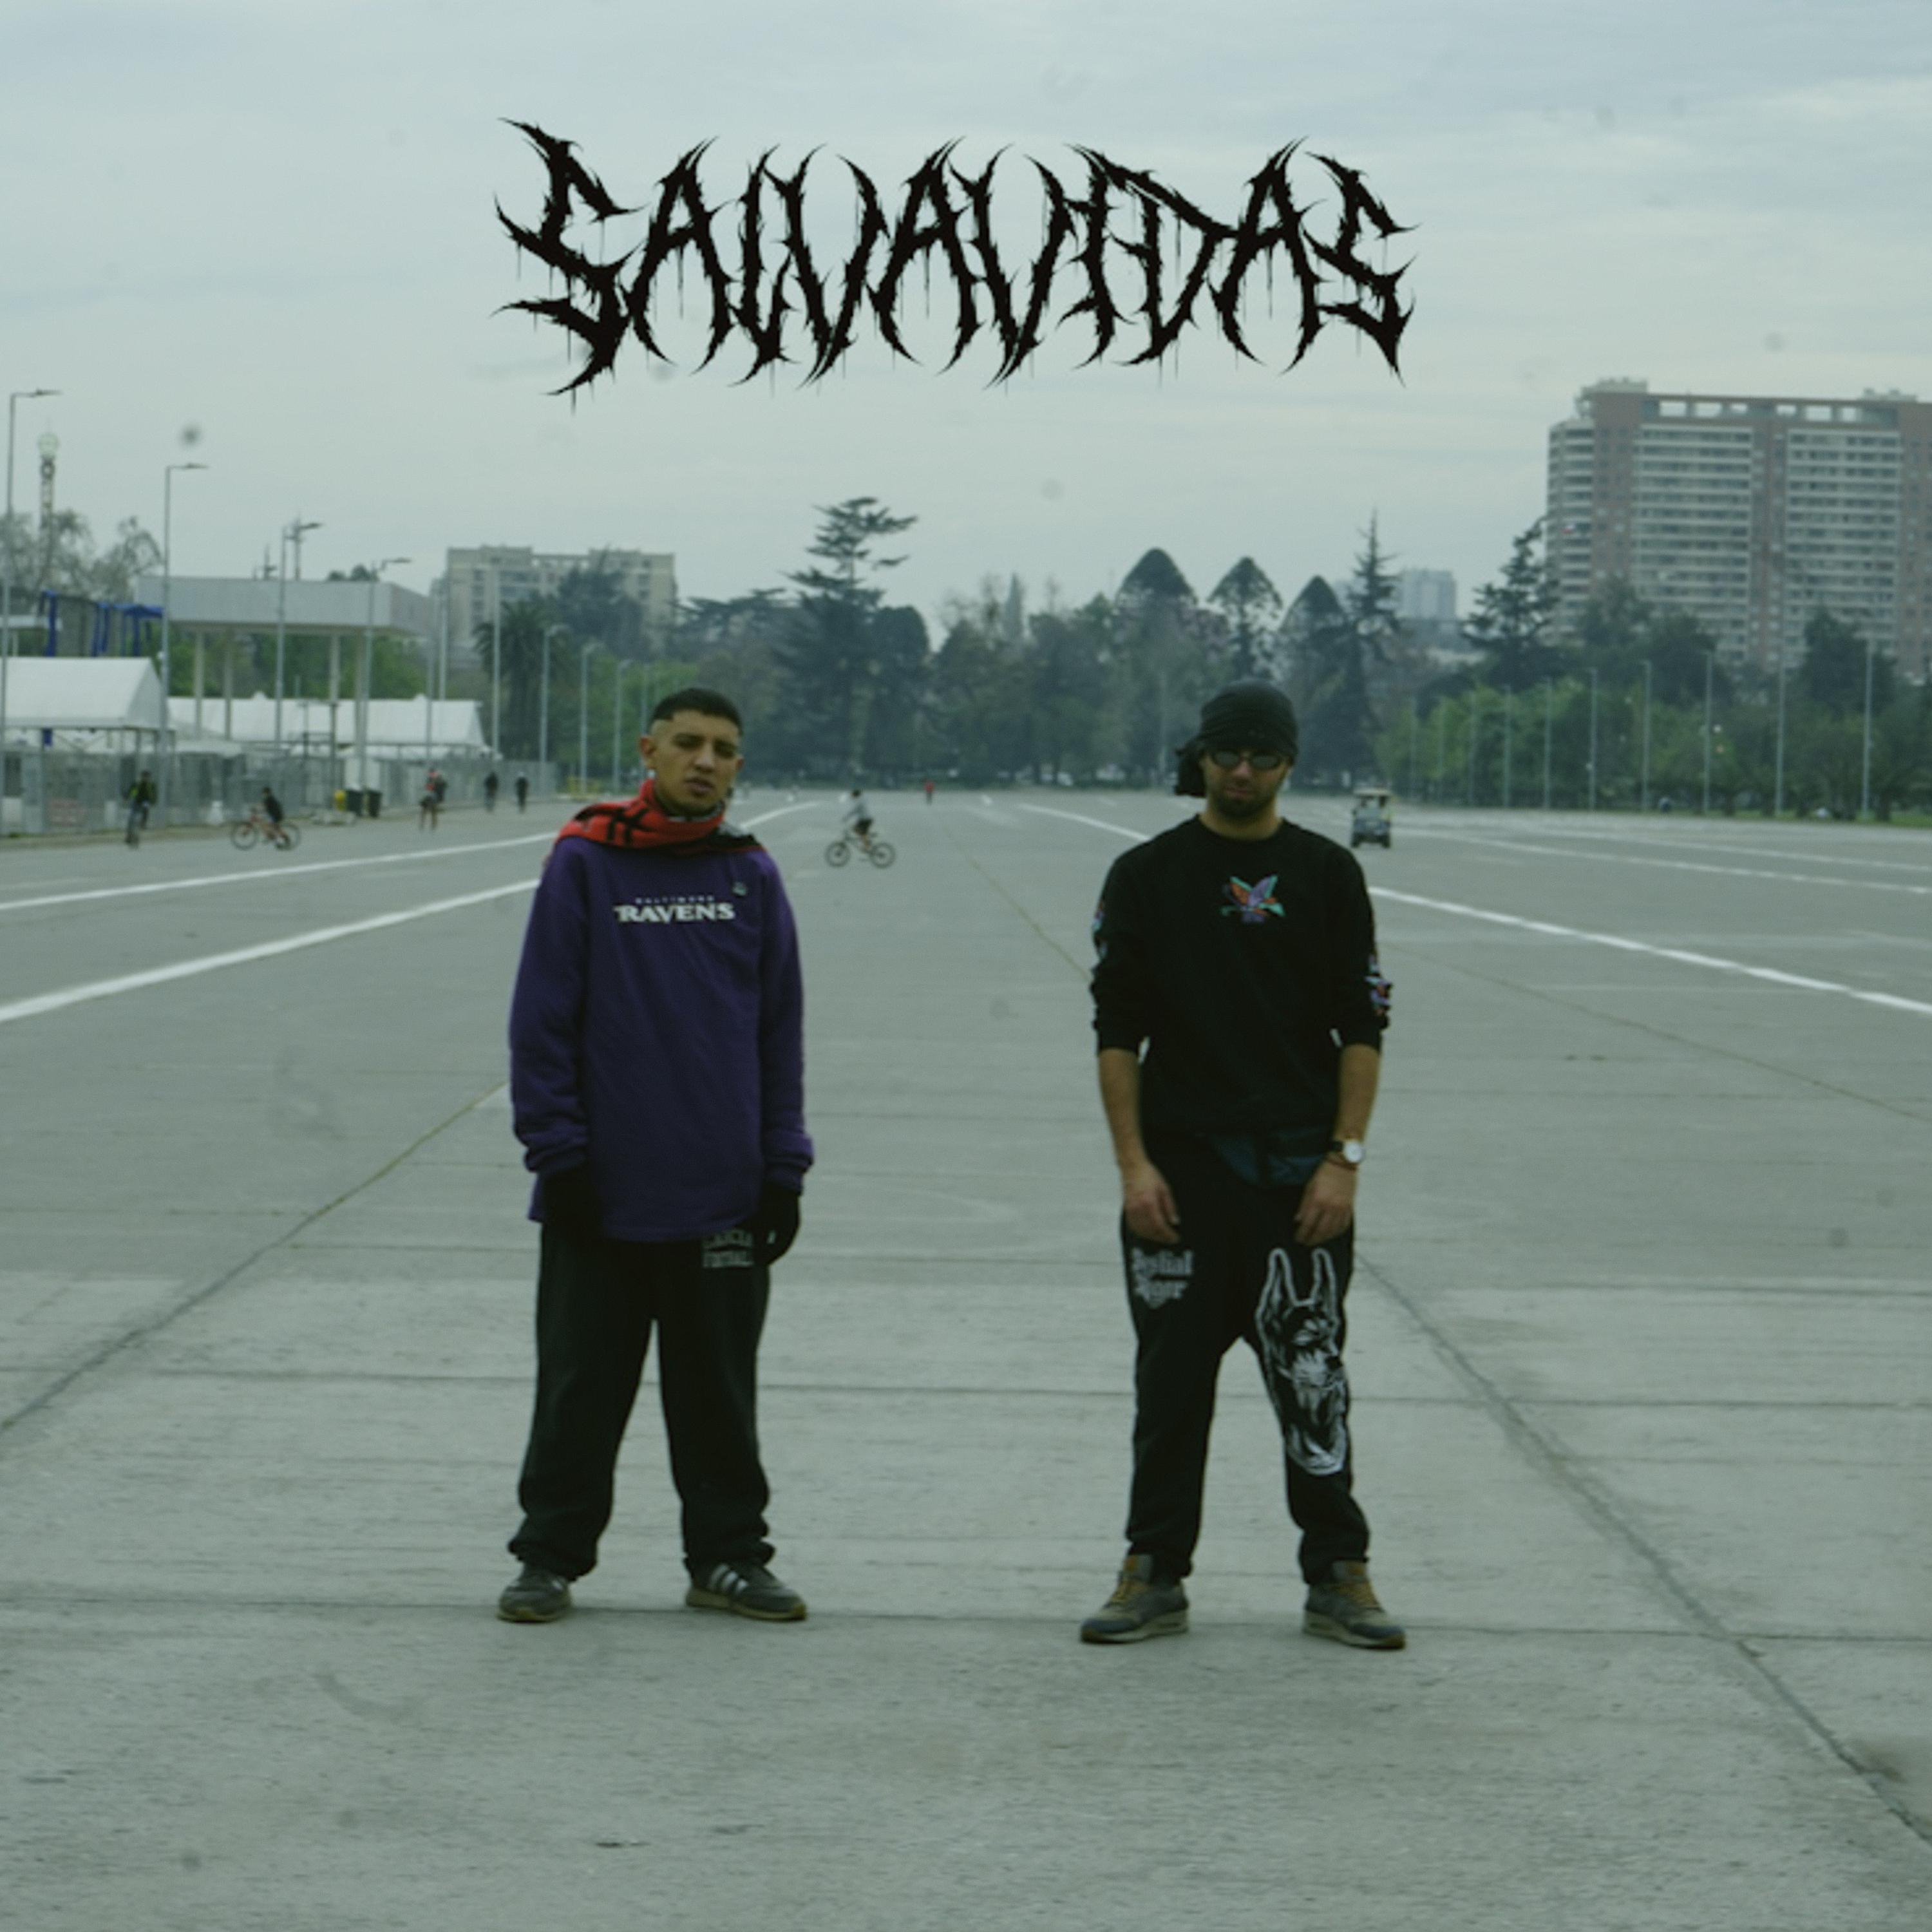 Постер альбома Salvavidas